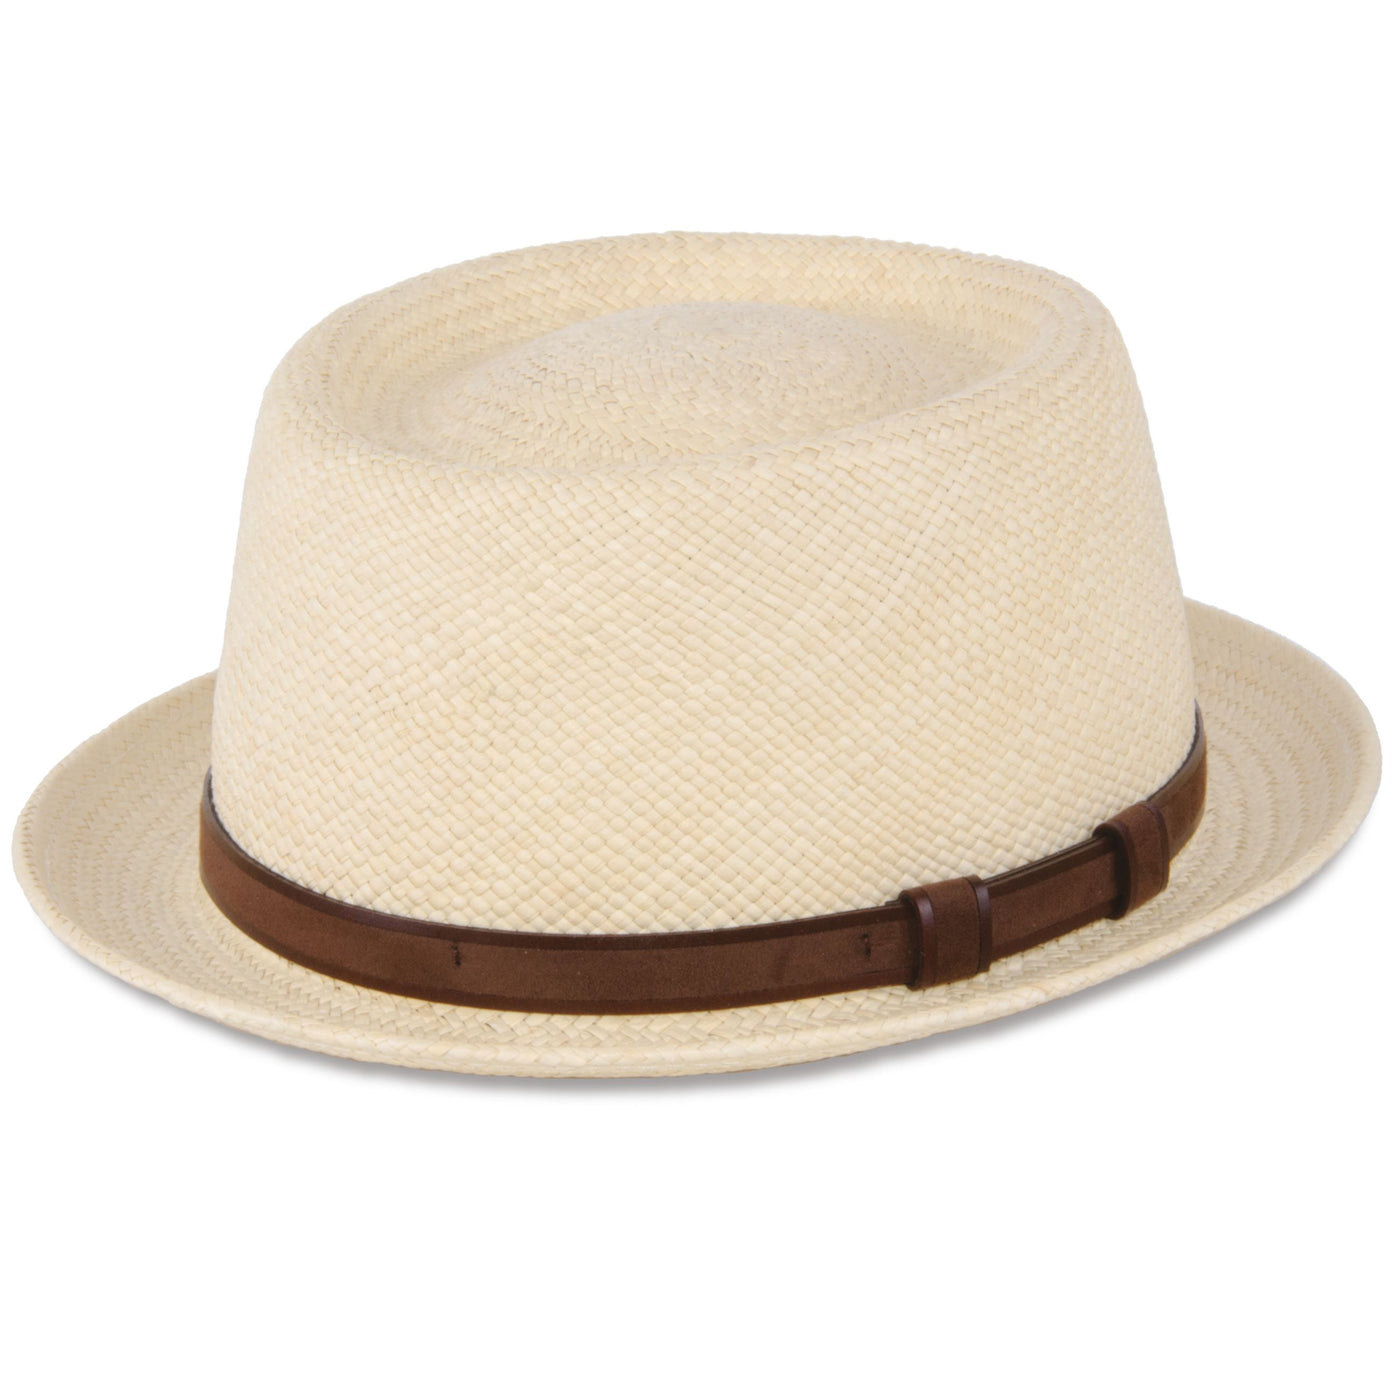 MJM LEO Porkpie Panama Hat - Stråhat Natural - Hat fra MJM Hats hos The Prince Webshop